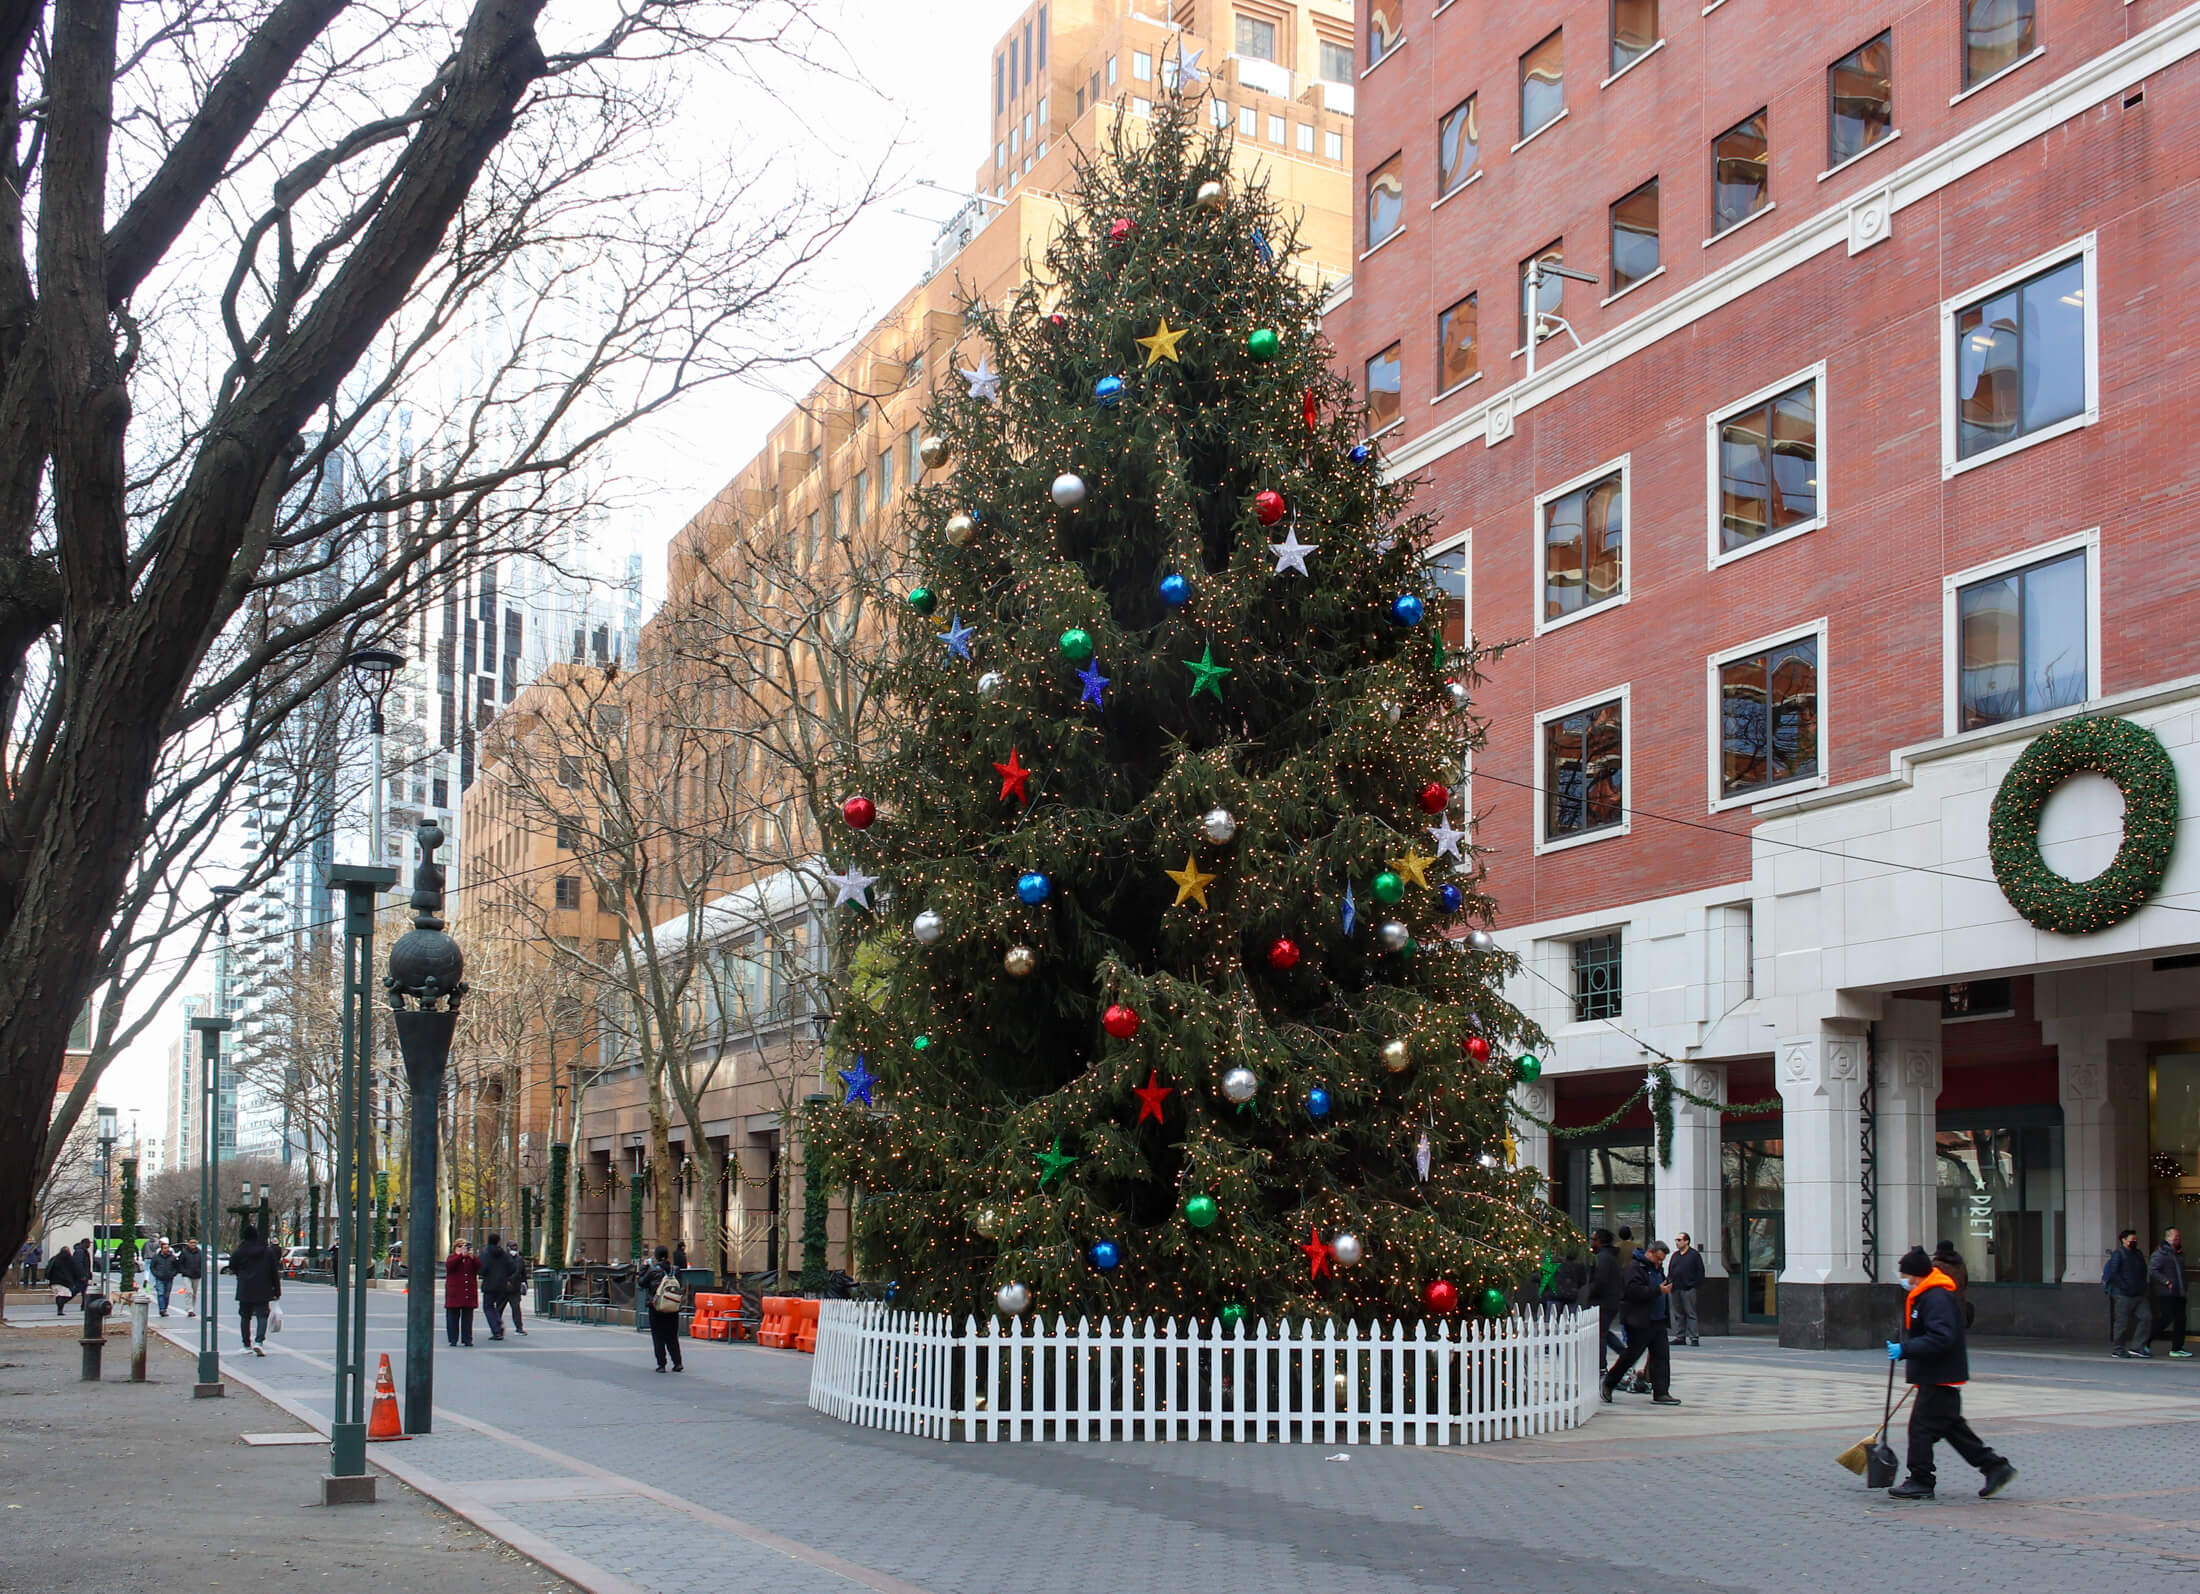 https://www.brownstoner.com/wp-content/uploads/2022/12/downtown-brooklyn-metrotech-christmas-tree-links-2022-sdevries-1.jpg